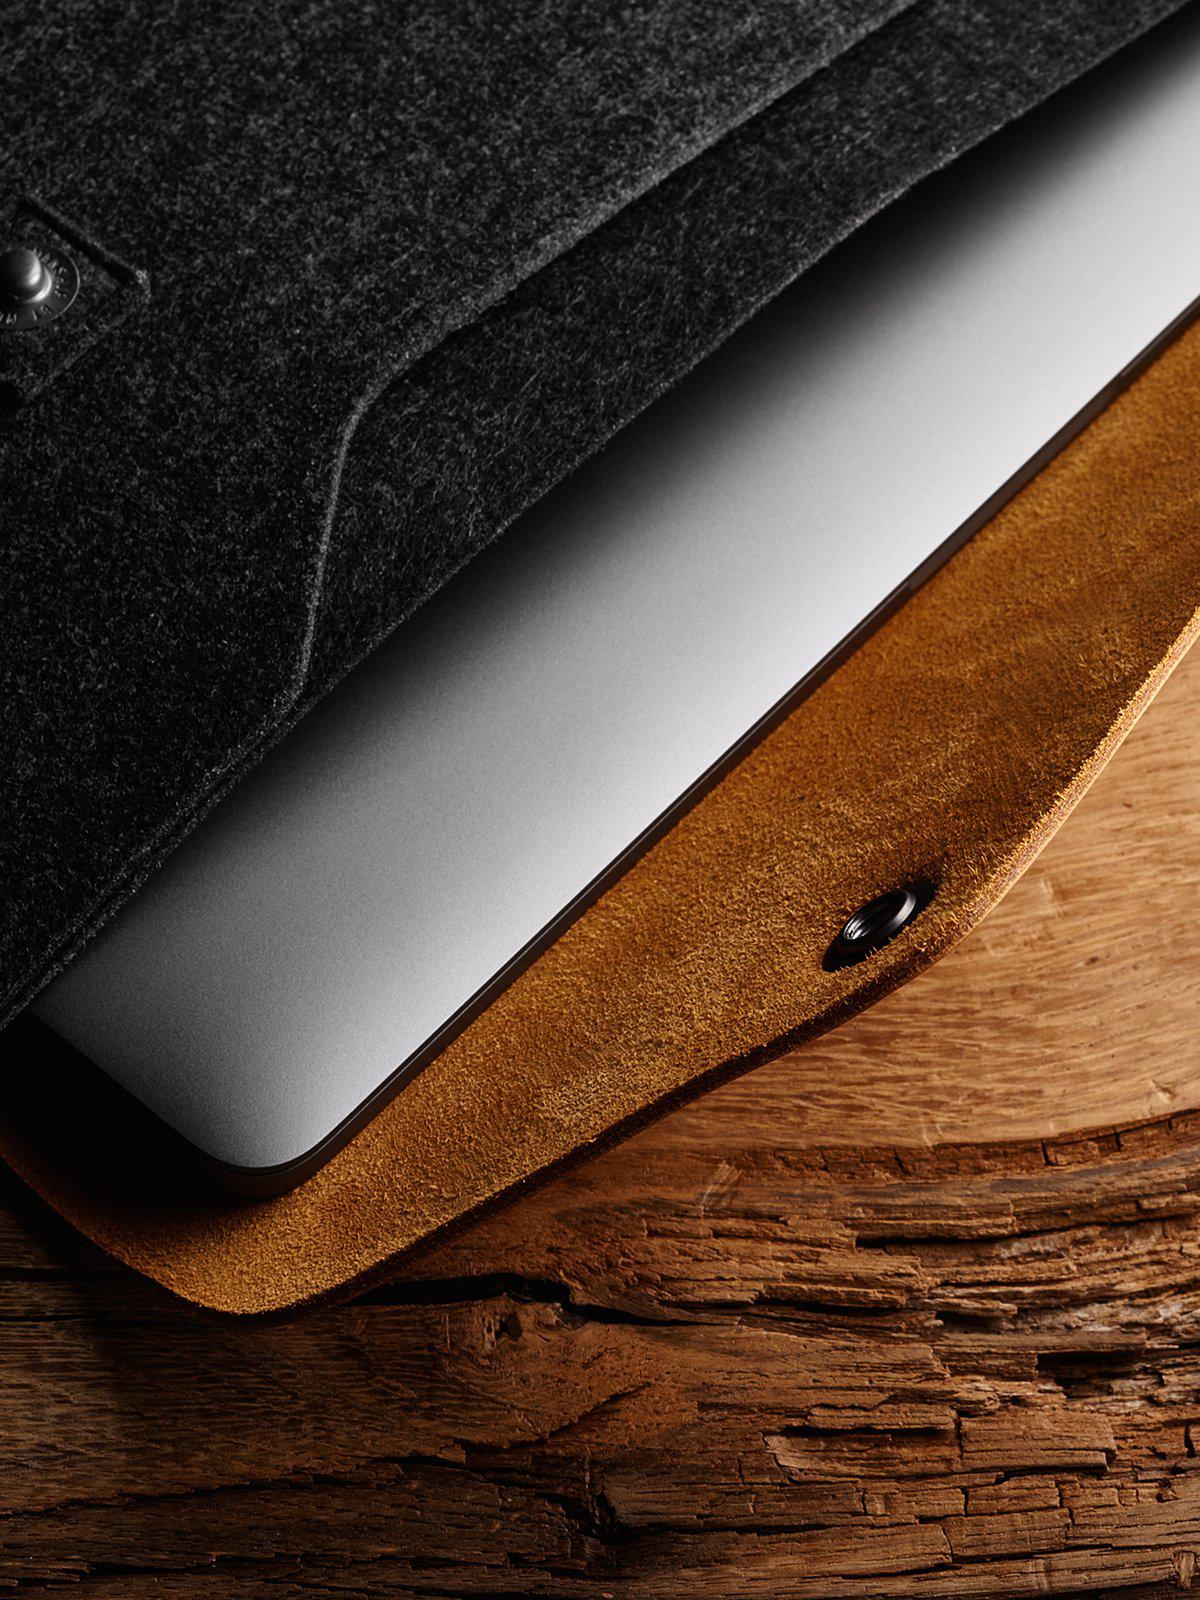 Mujjo Laptop Sleeve for Macbook Pro 16 Inch Tan